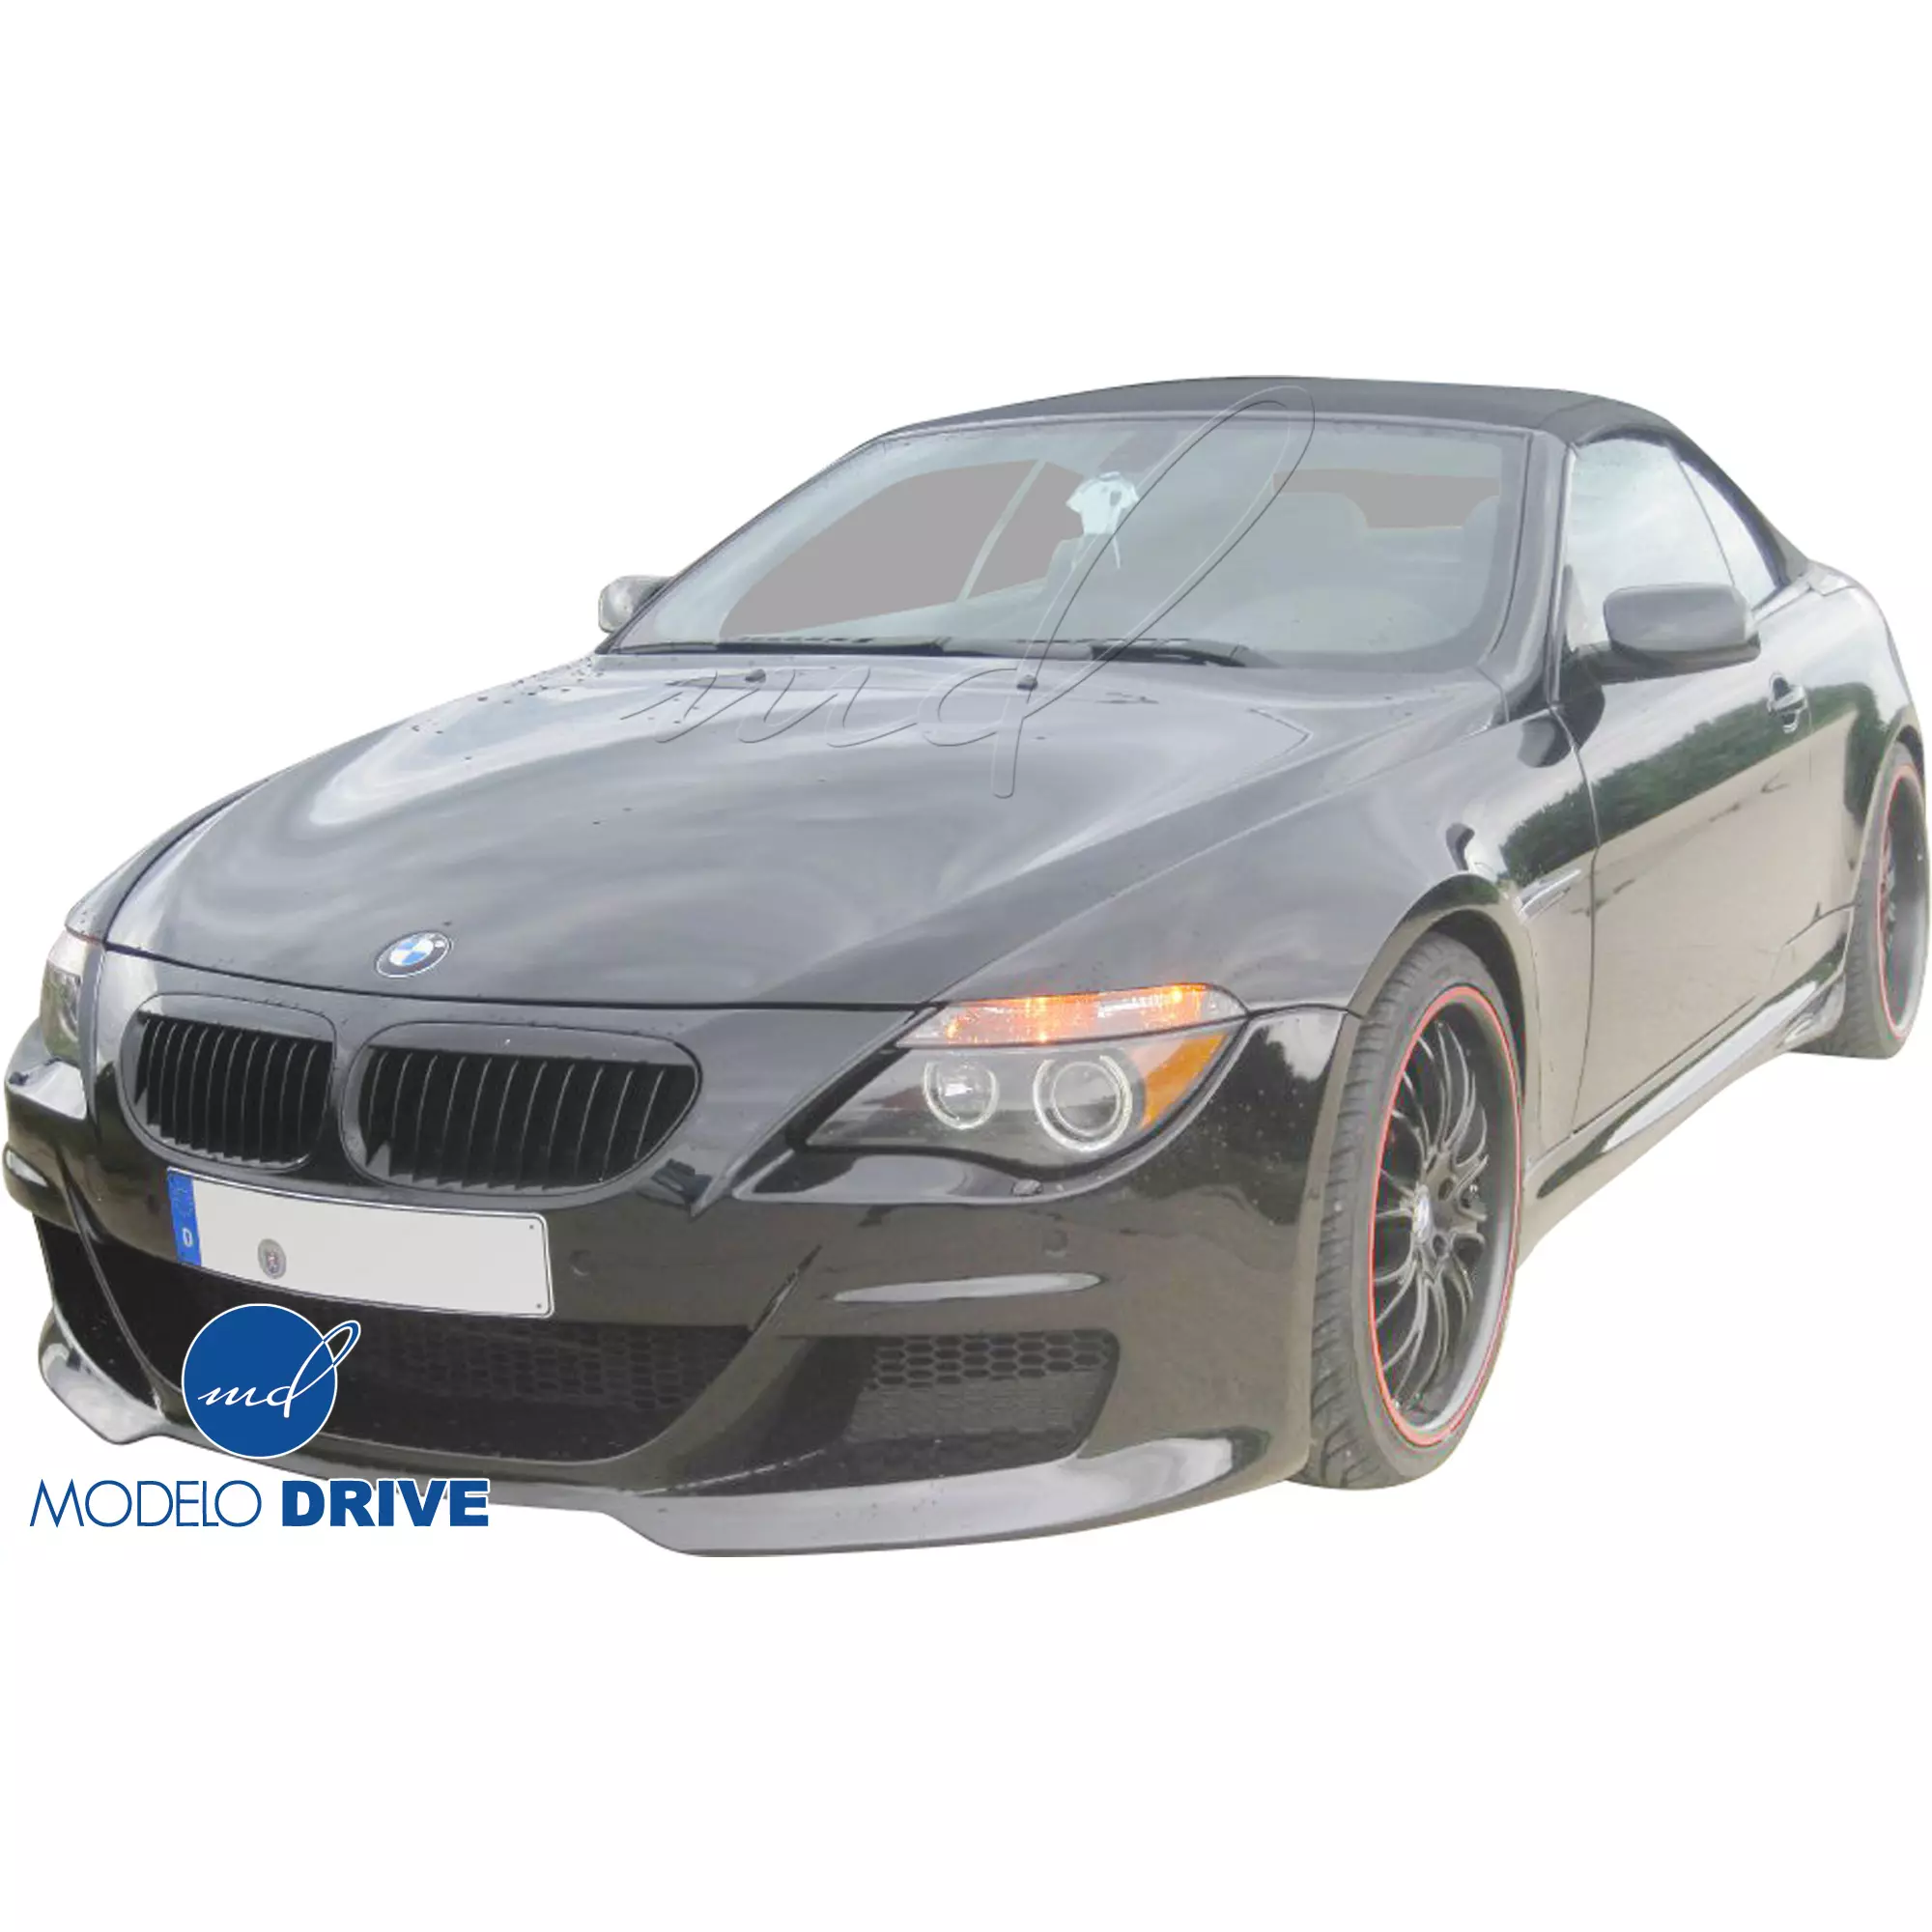 ModeloDrive FRP LDES Body Kit 4pc > BMW 6-Series E63 E64 2004-2010 > 2dr - Image 16